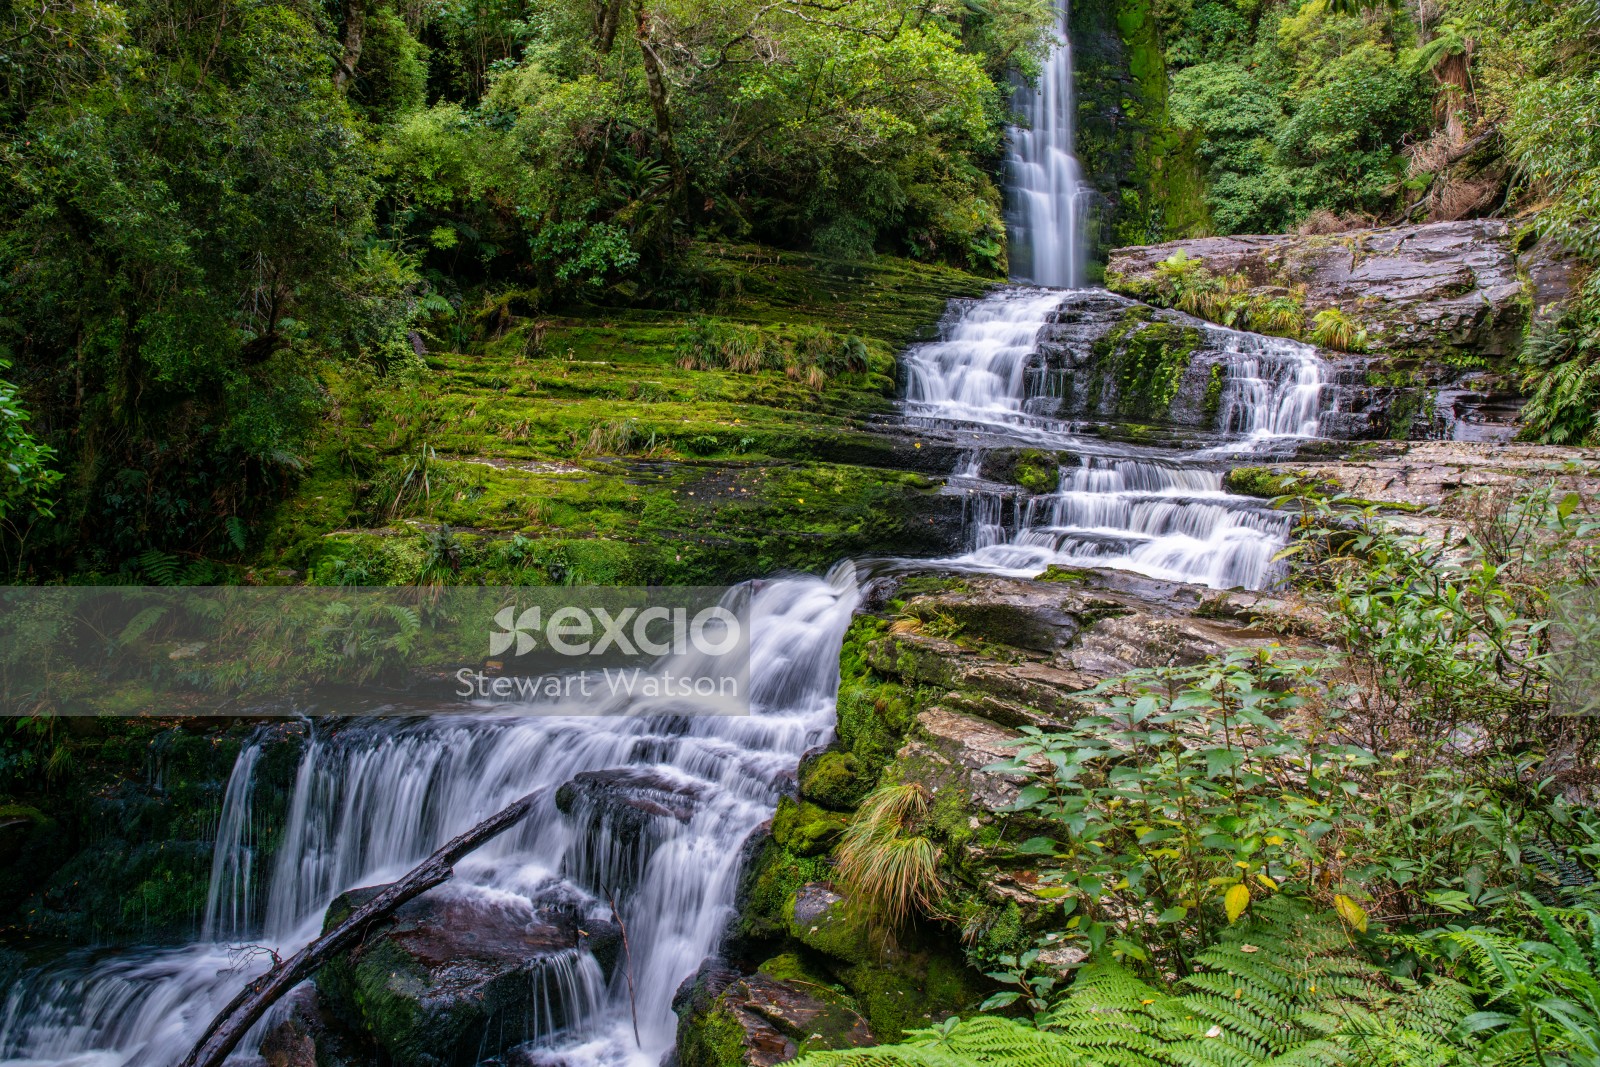 McLean waterfall in the Catlins